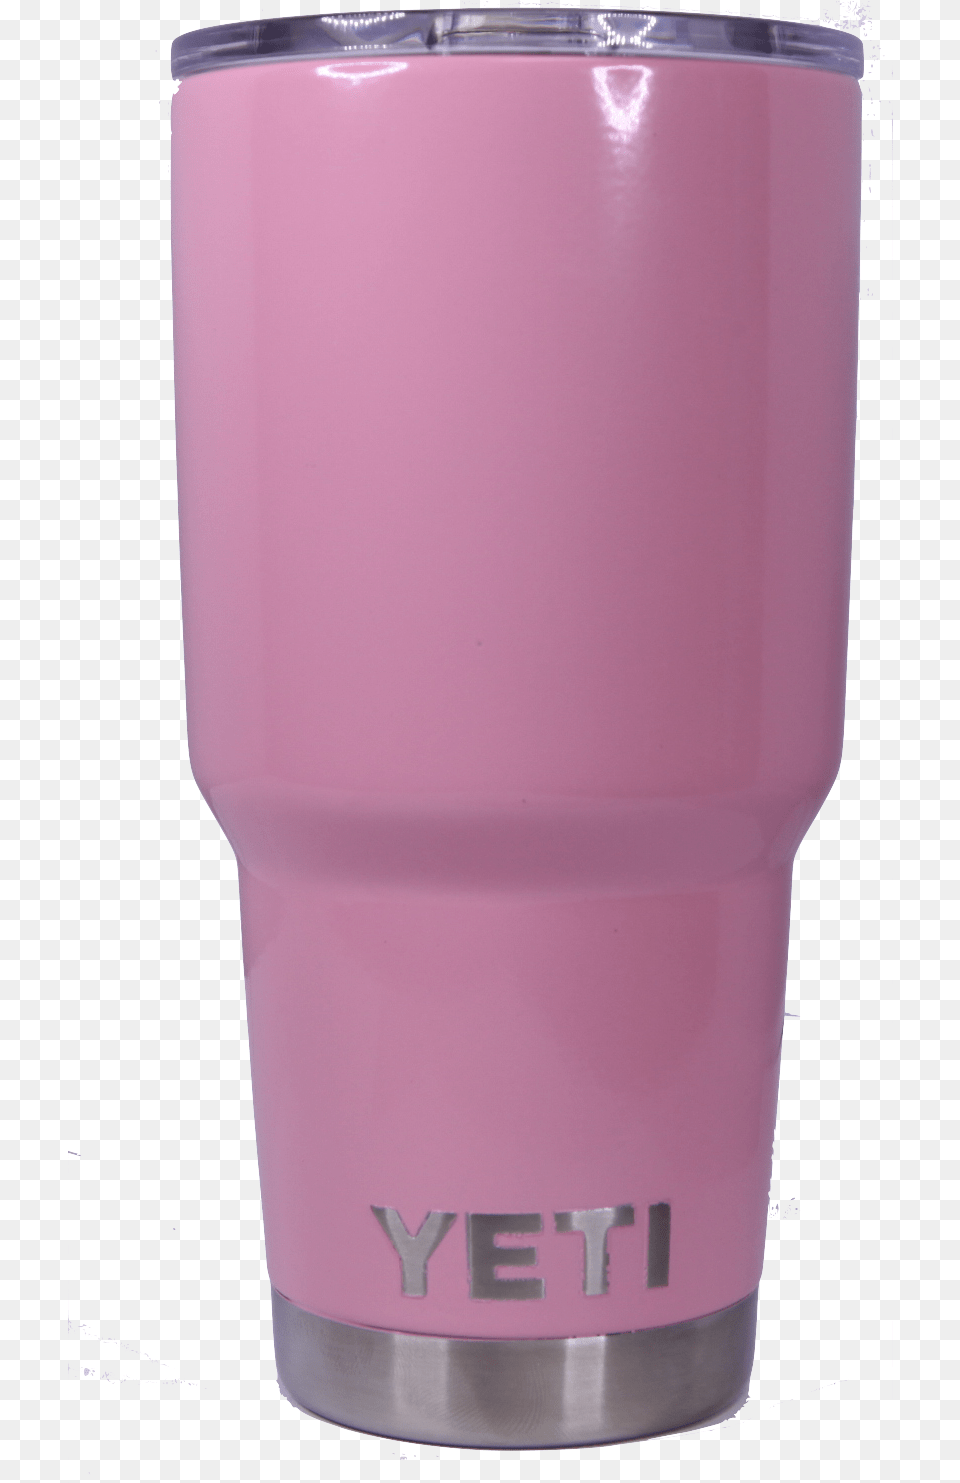 Light Pink Yeti Yeti, Can, Tin, Electronics, Cosmetics Png Image